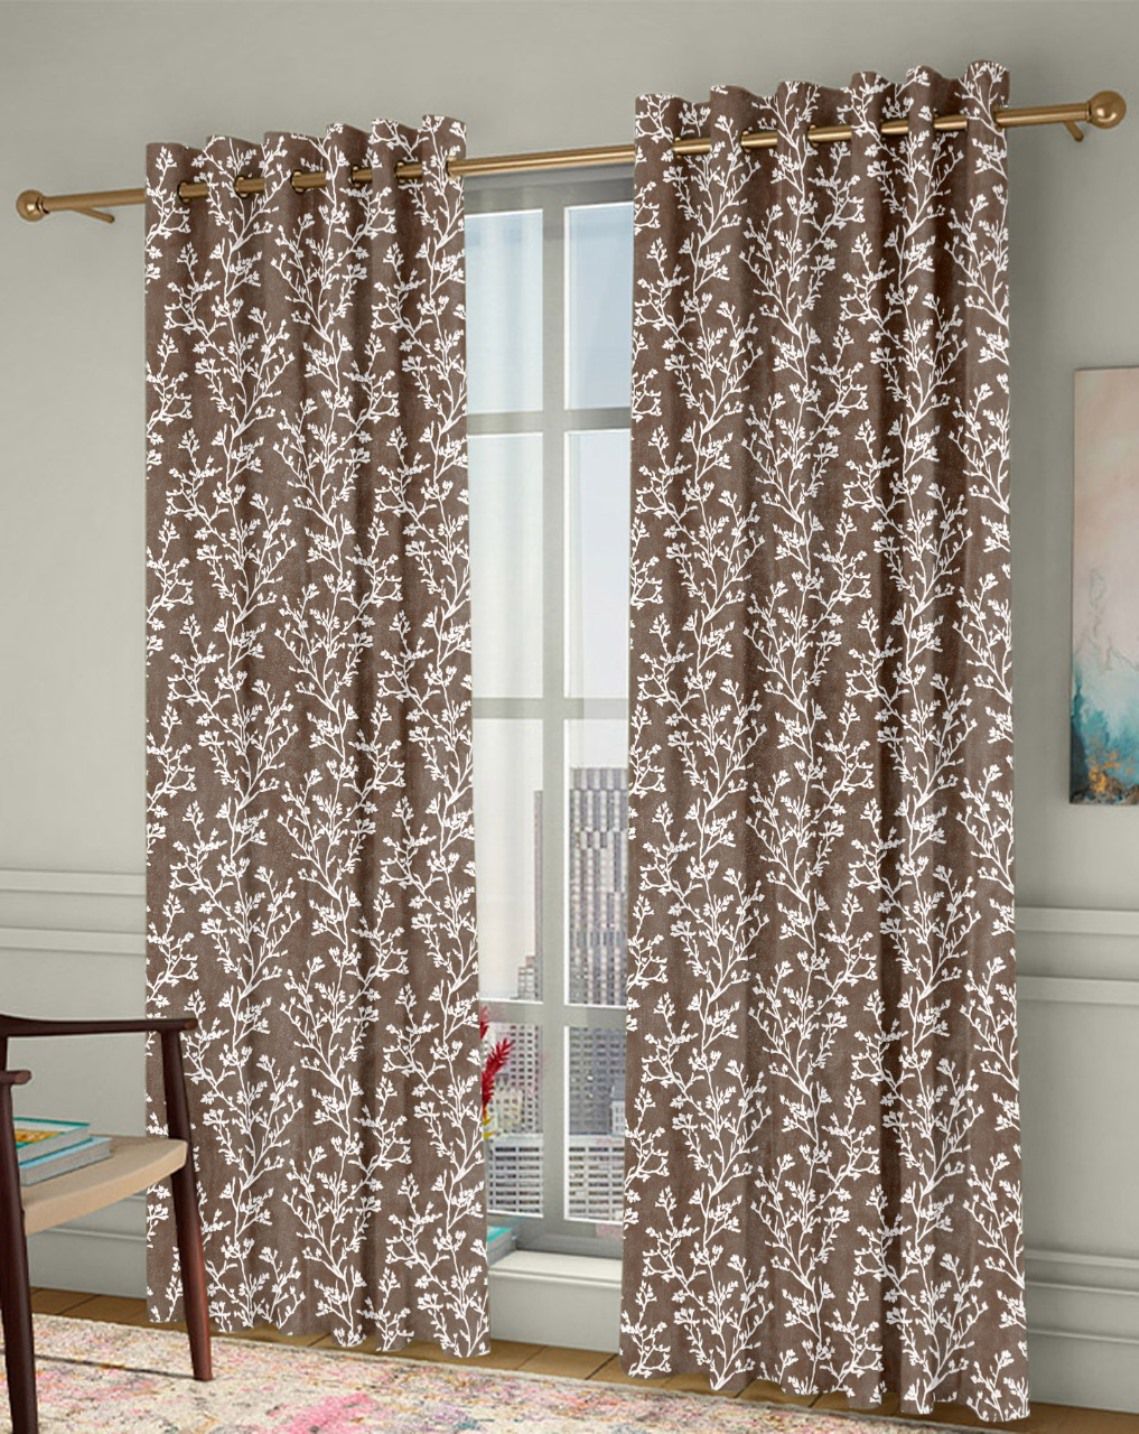     			Homefab India Floral Room Darkening Eyelet Curtain 5 ft ( Pack of 2 ) - Brown